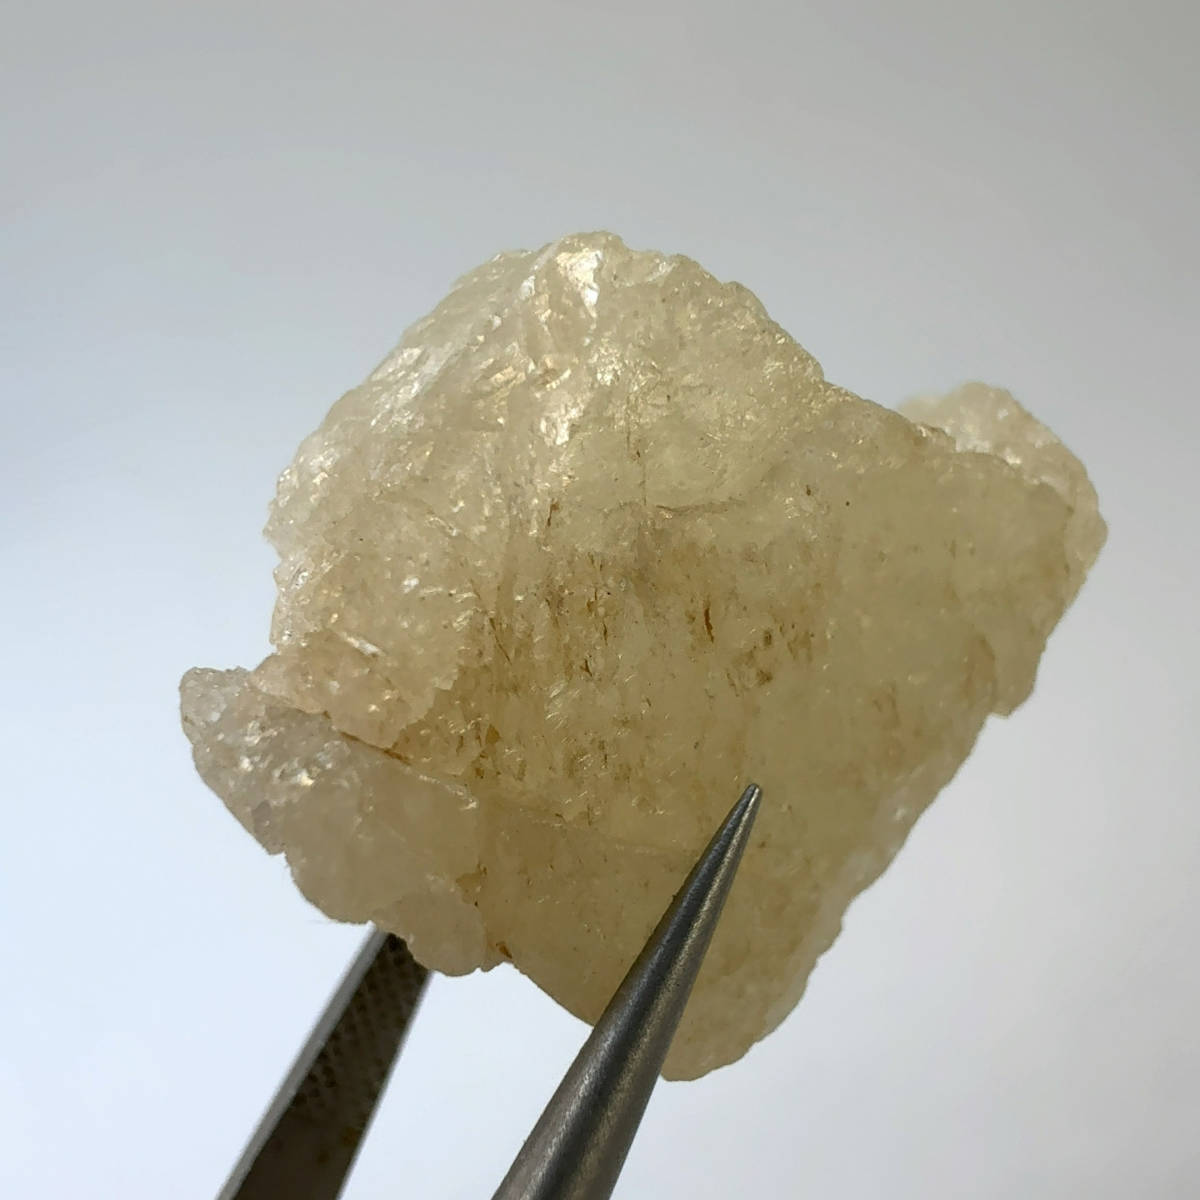 【E23801】 アンブリゴナイト アンブリゴ石 天然石 原石 鉱物 パワーストーン